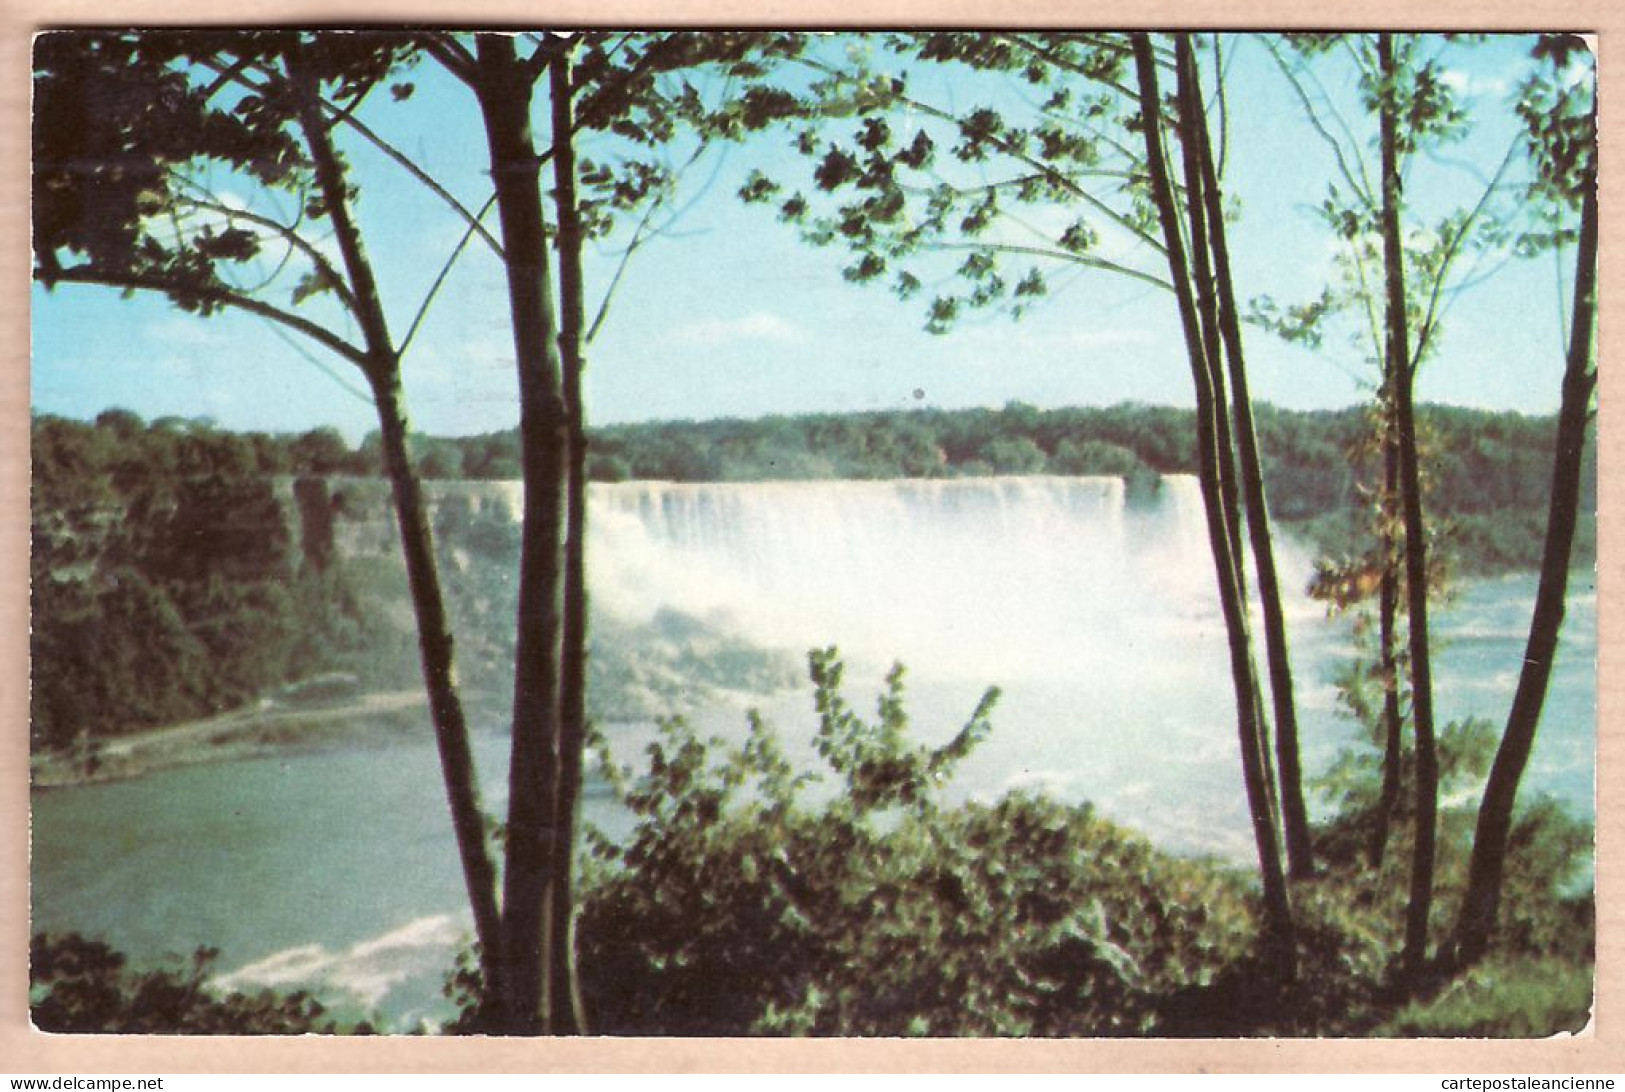 2280 / ⭐ Canada AMERICAN NIAGARA FALLS From CANADIAN Postmarked 11.05.1956 Publisher LESLIE Guenine Kodachrome ONTARIO - Chutes Du Niagara